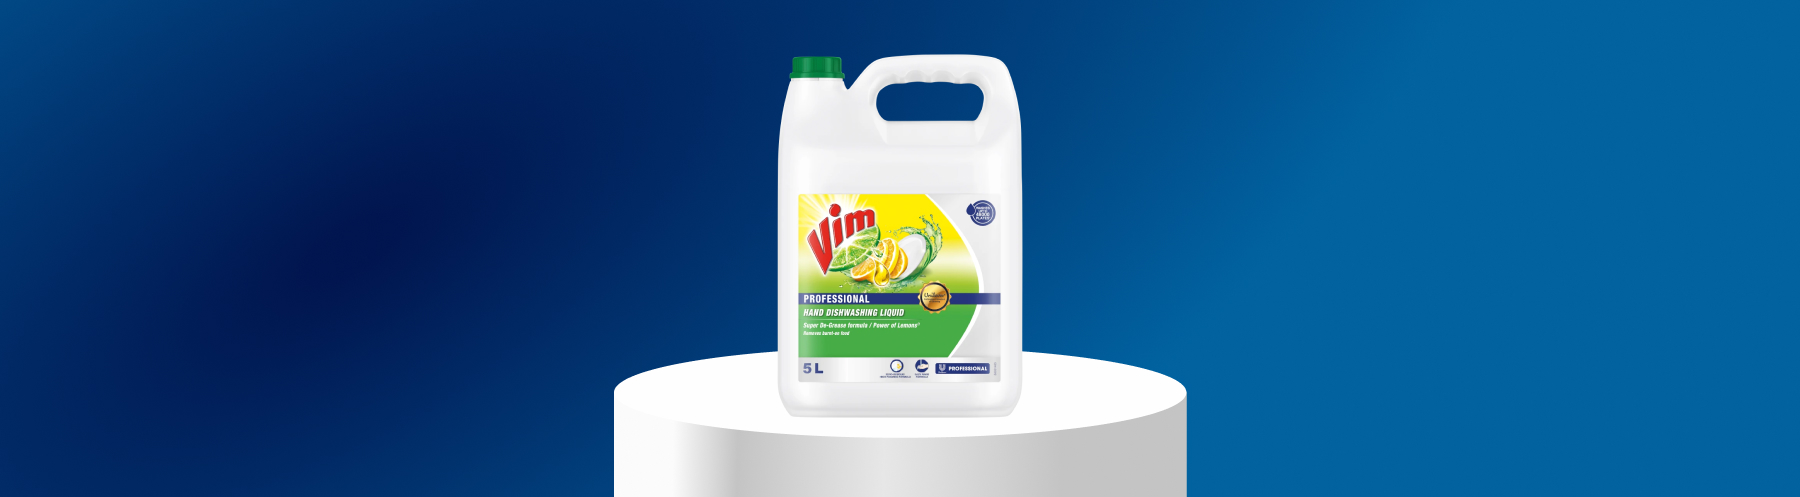 Vim Megapack + FREE Domex Toilet Bowl Cleaner 5L — Unilever Professional  India